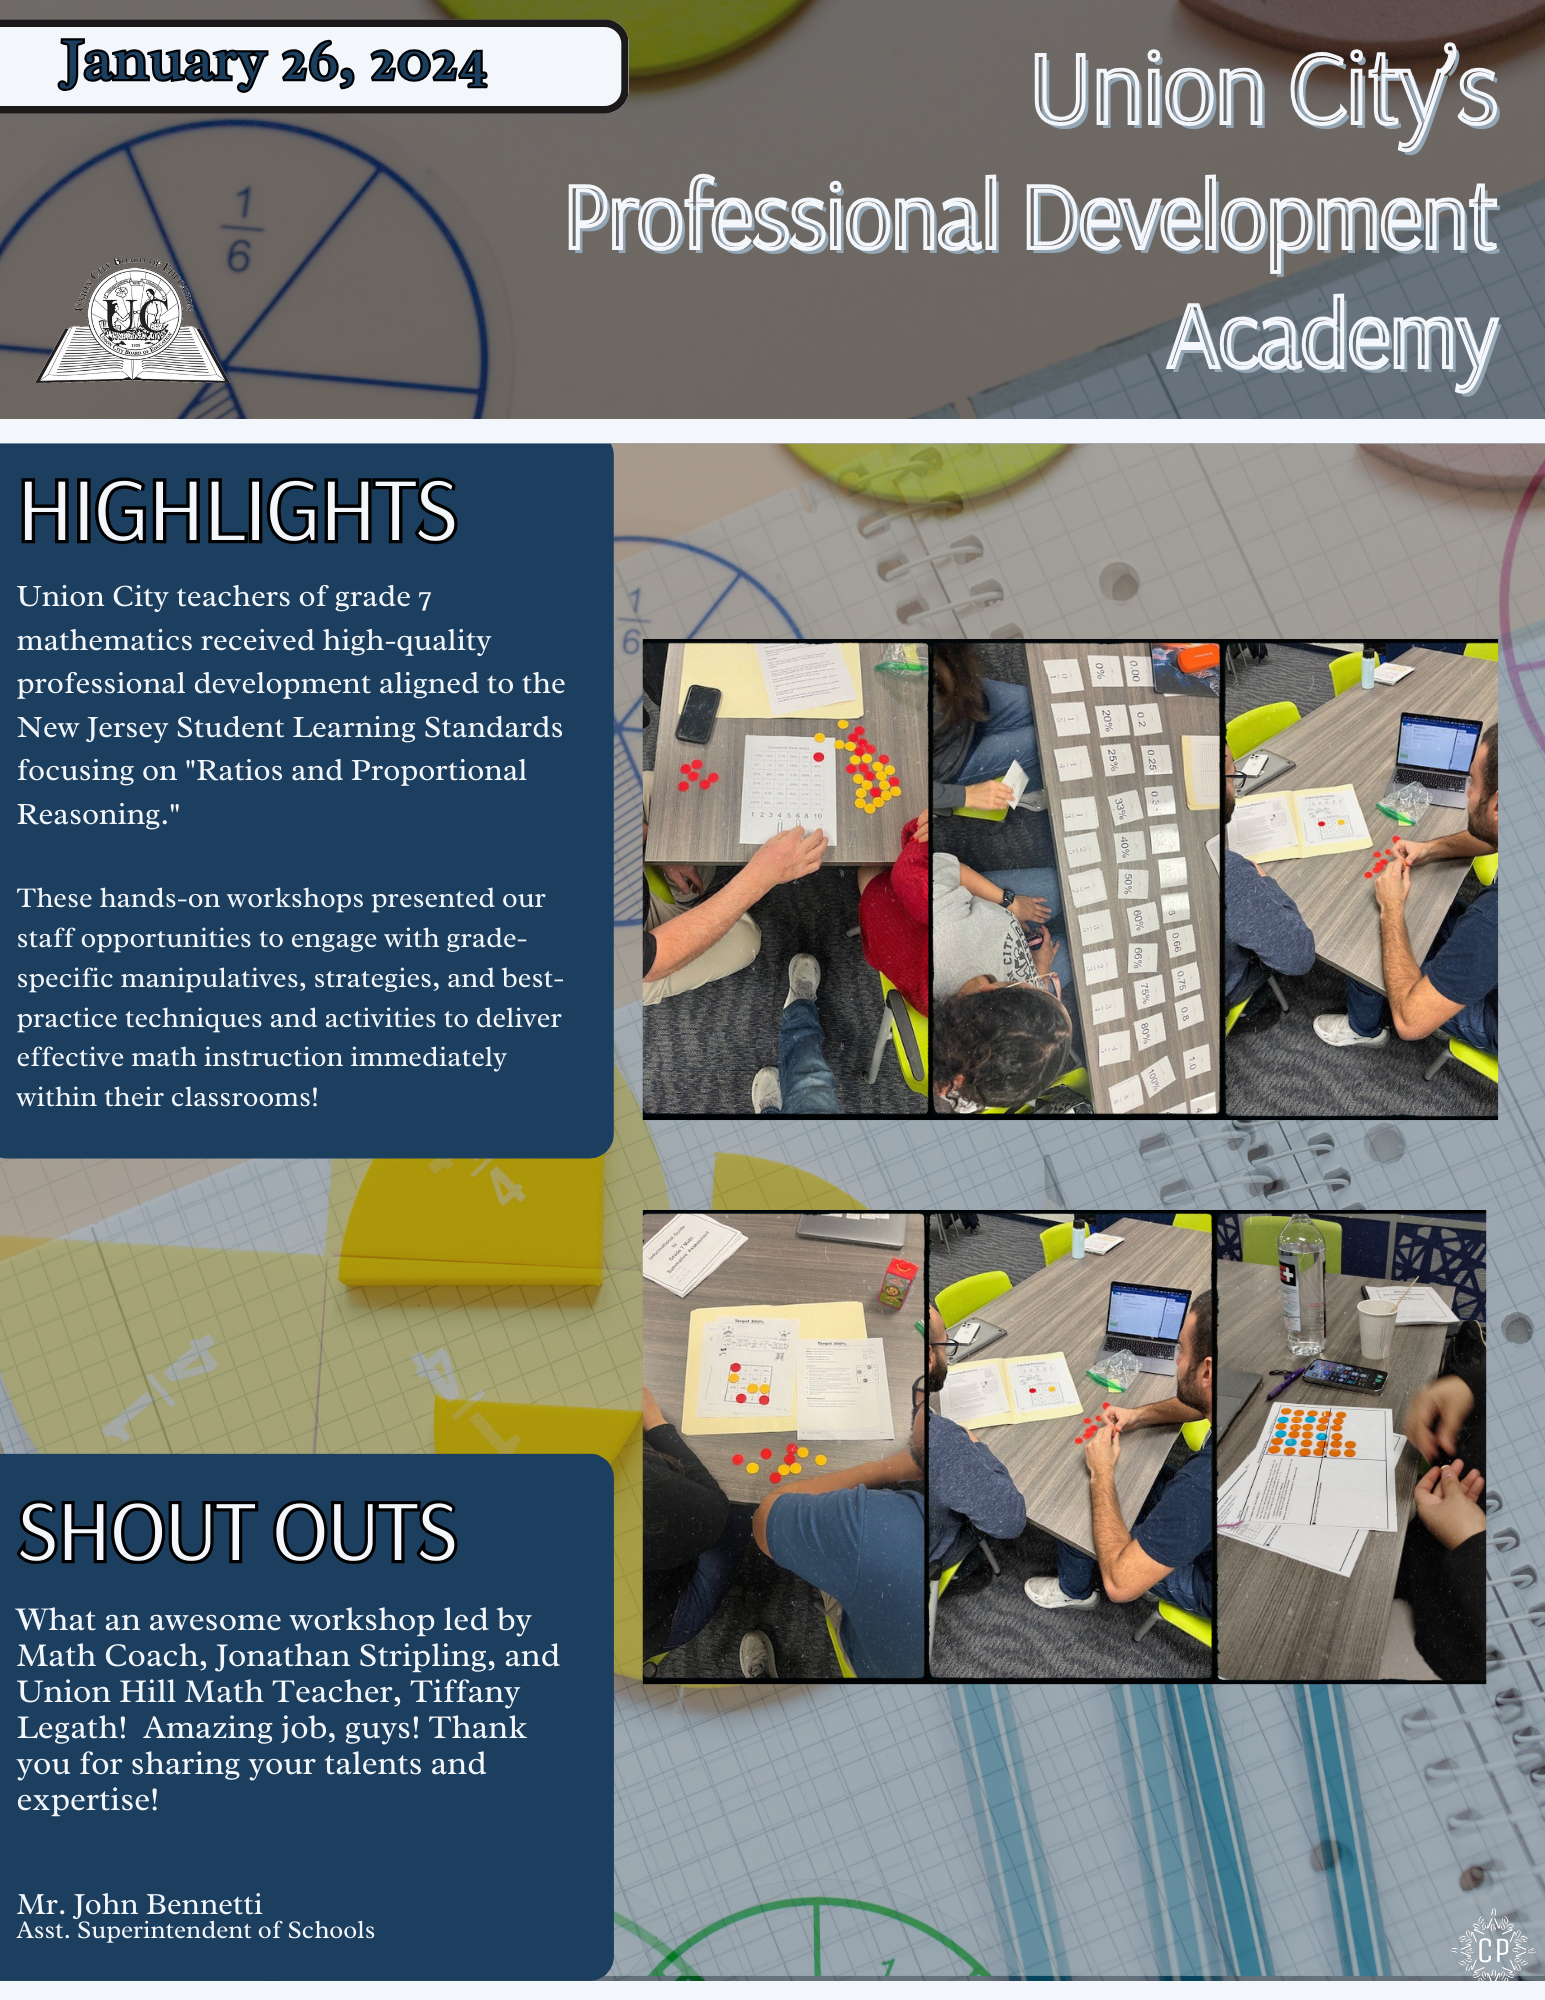 Union City Professional Development Academy Information